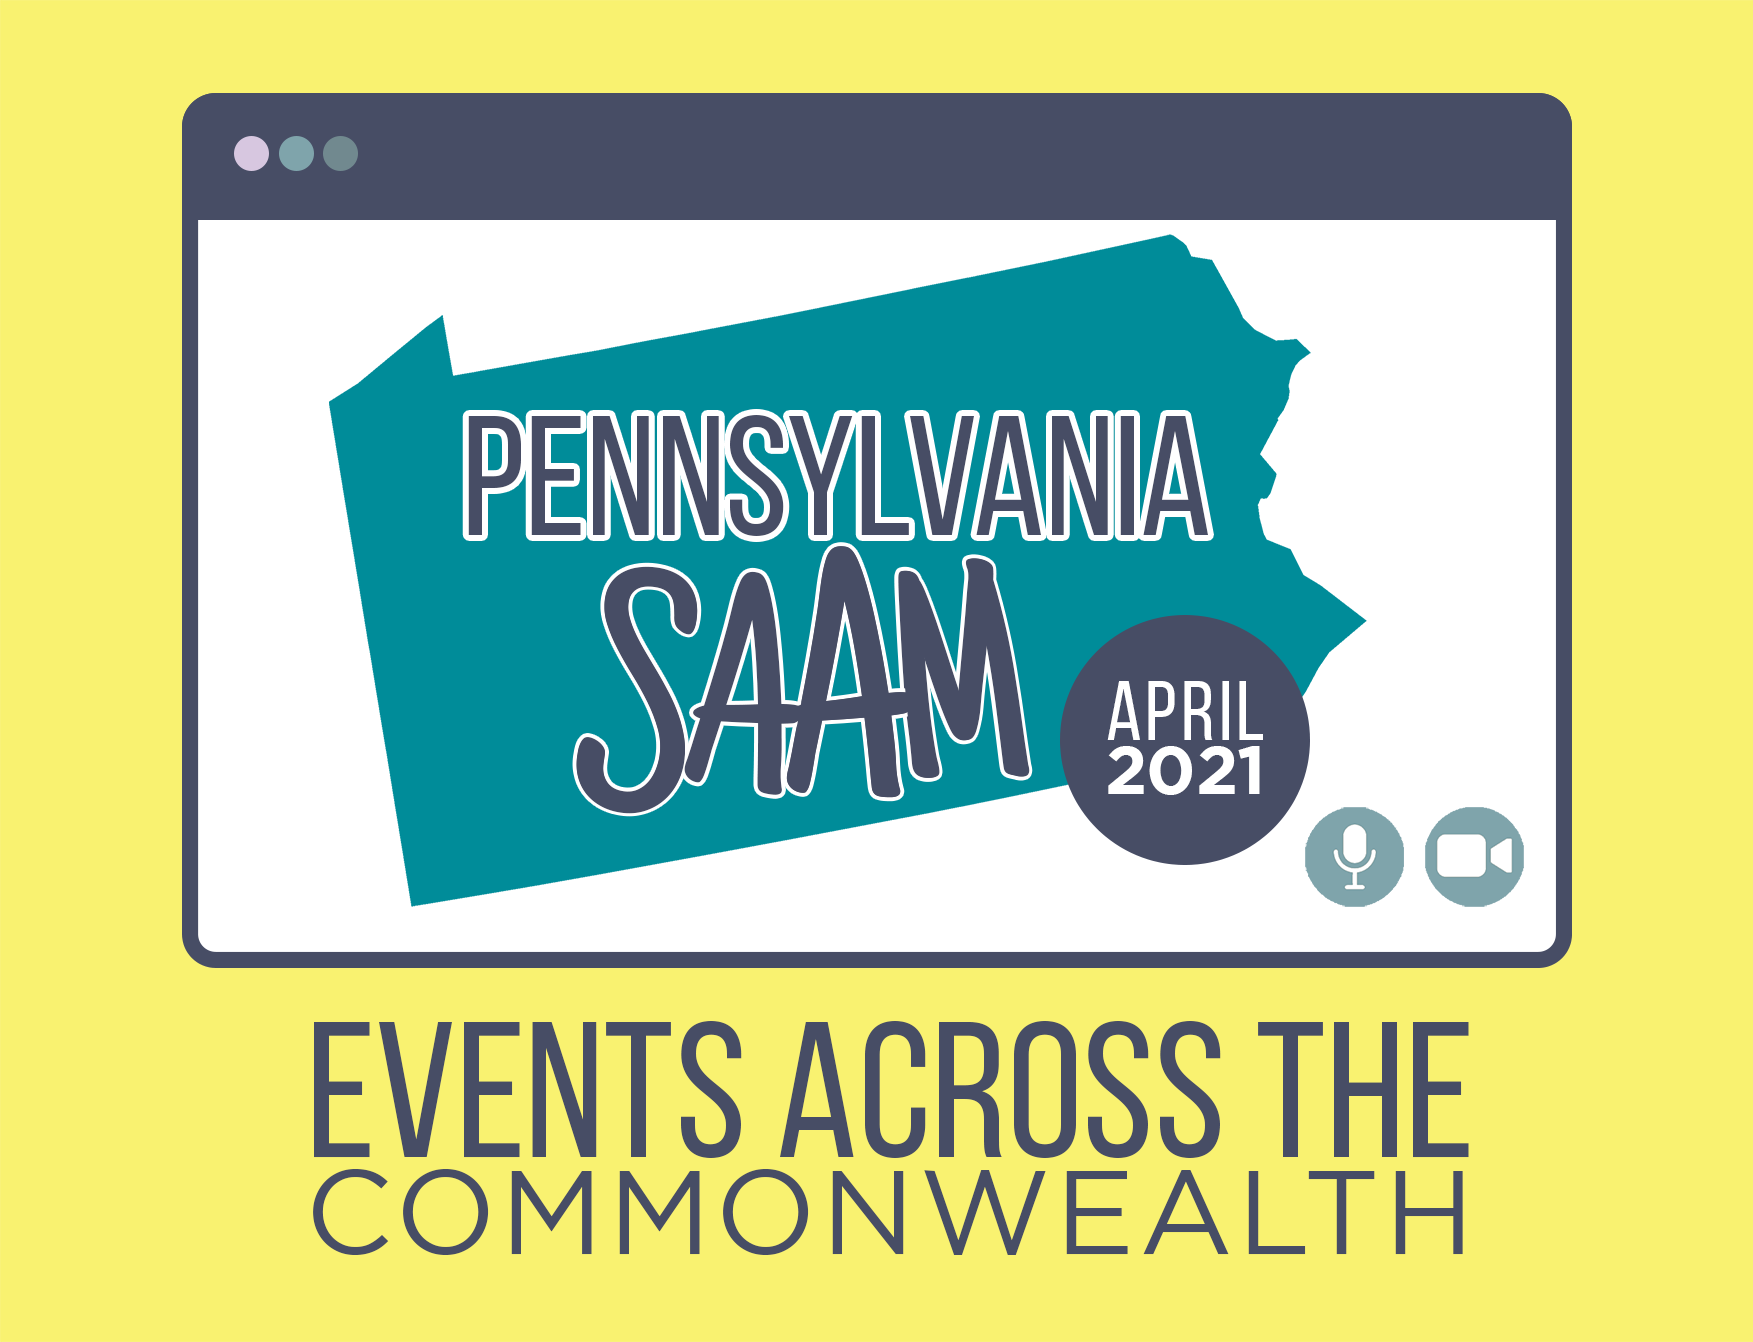 Pennsylvania SAAM April 2021: Events Across the Commonwealth